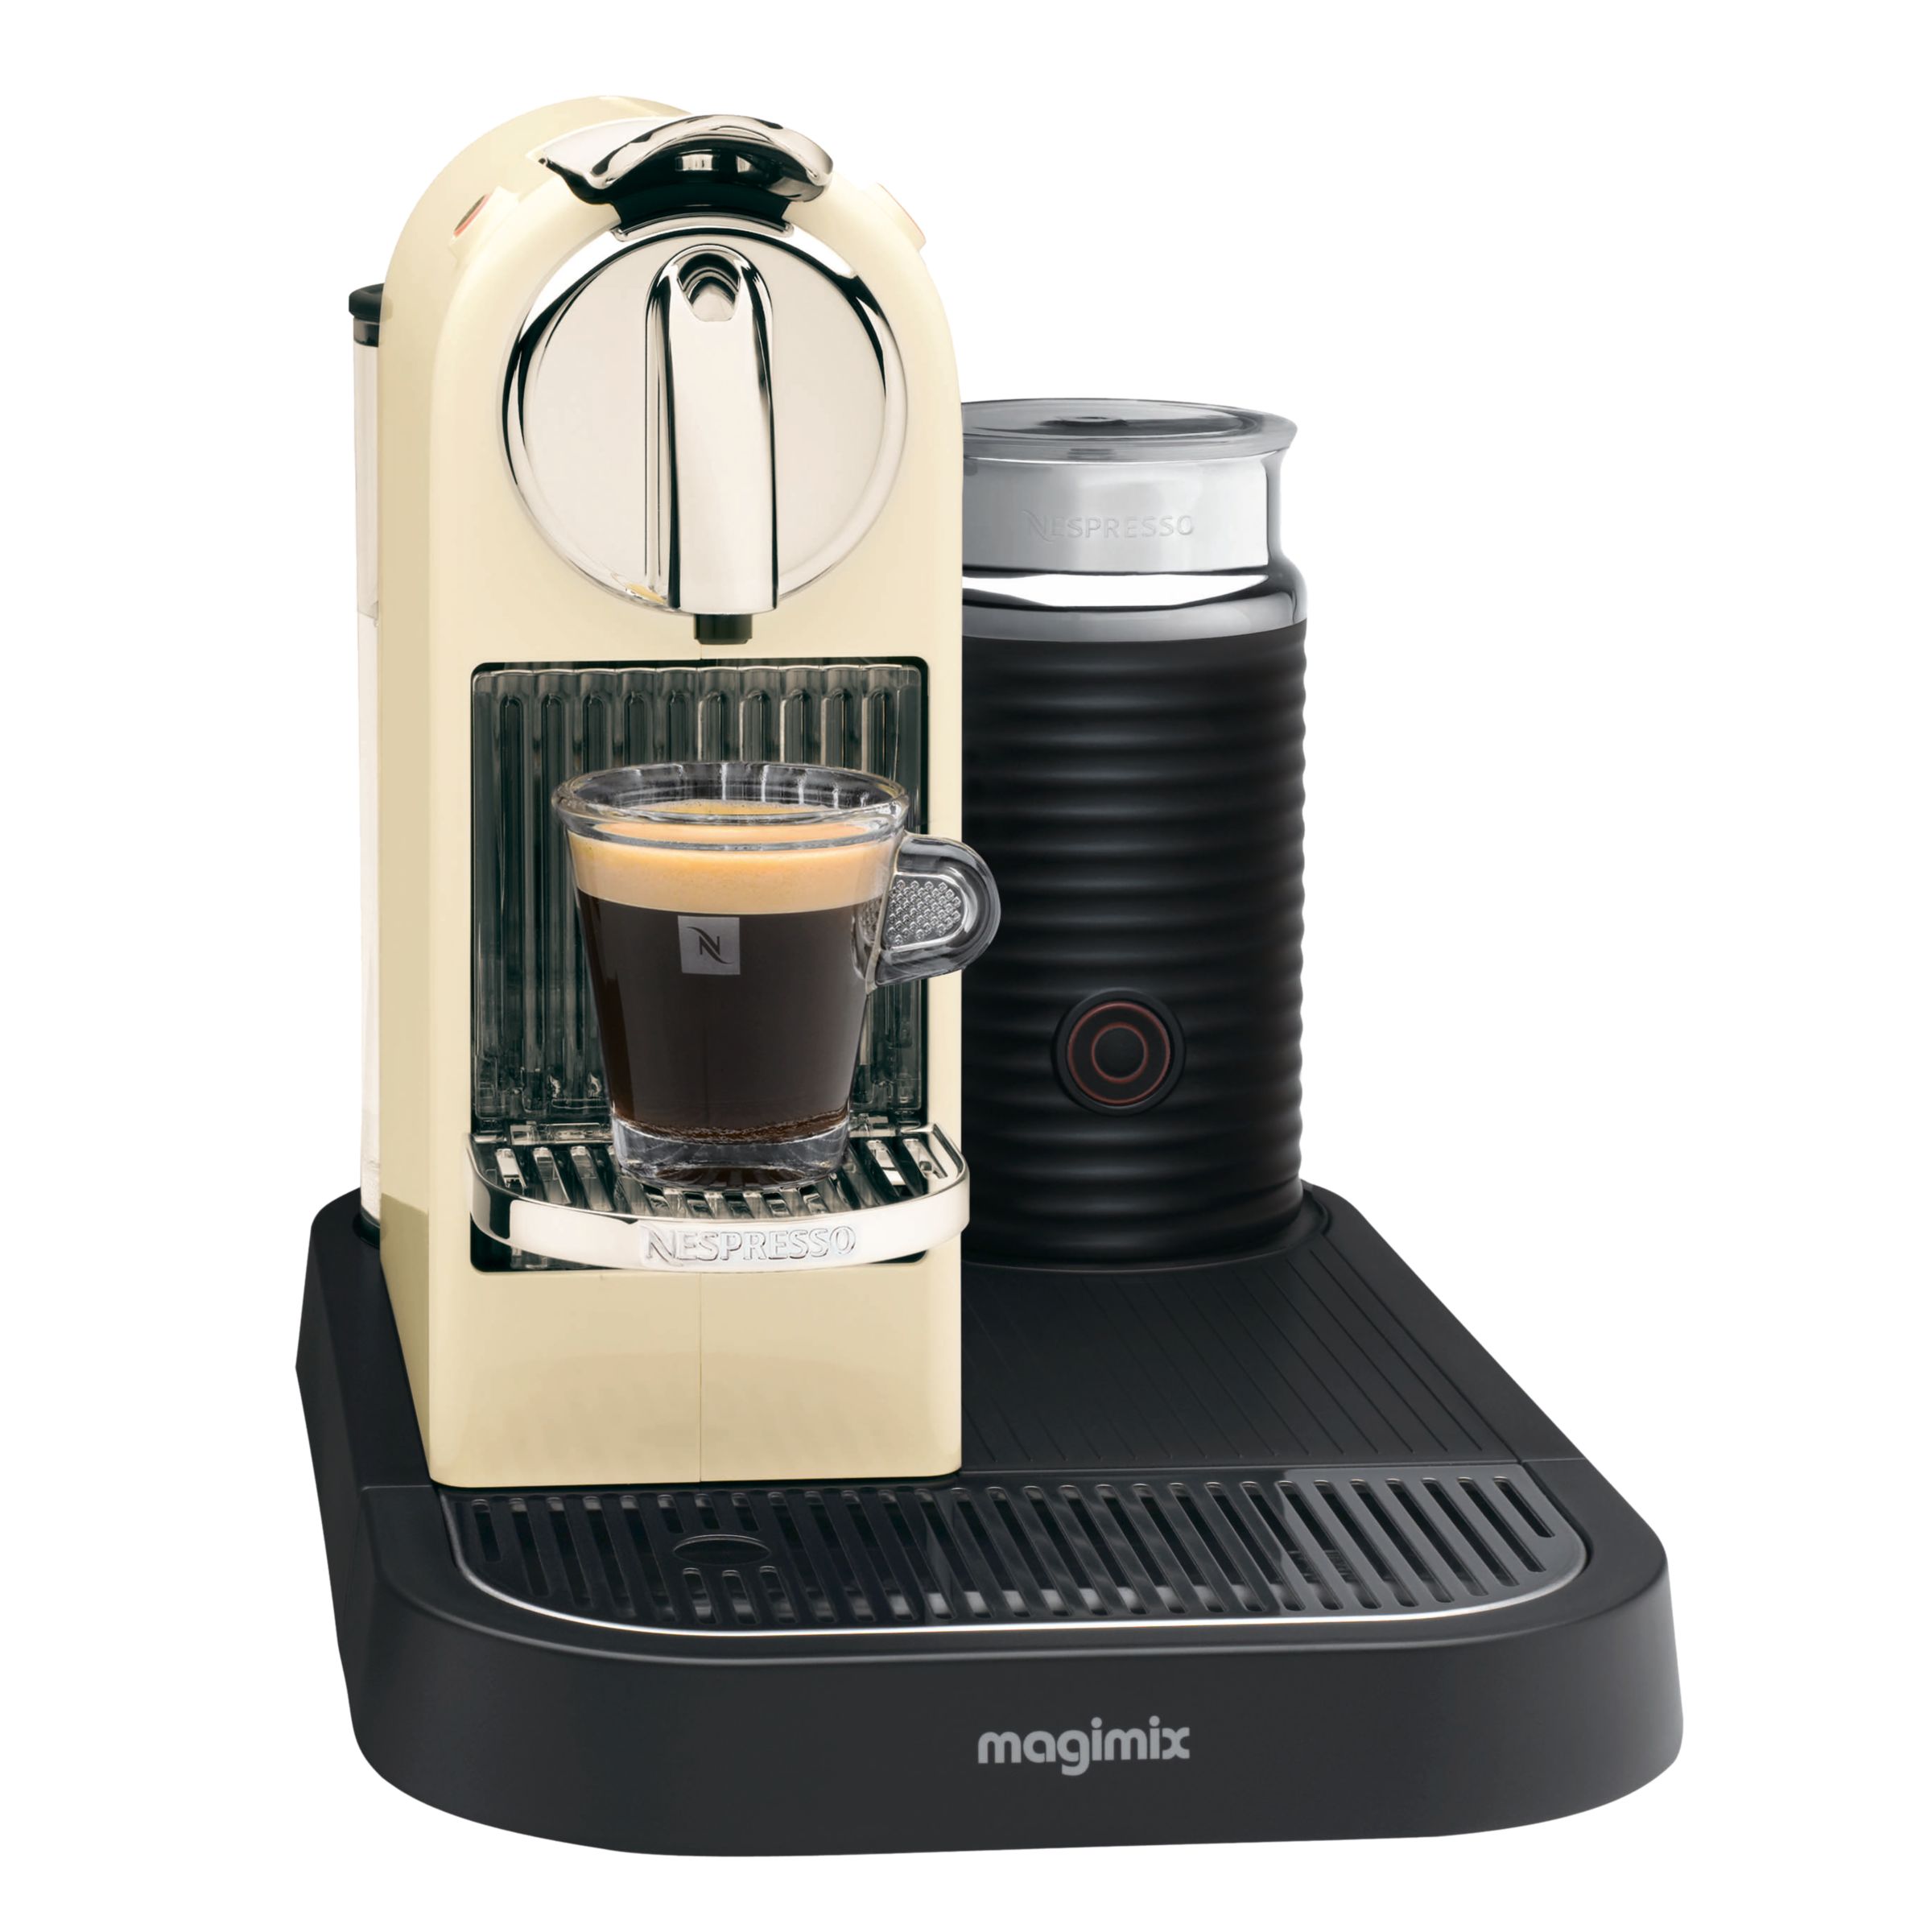 Nespresso 190 CitiZ and Milk Coffee Maker by Magimix, Cream at John Lewis